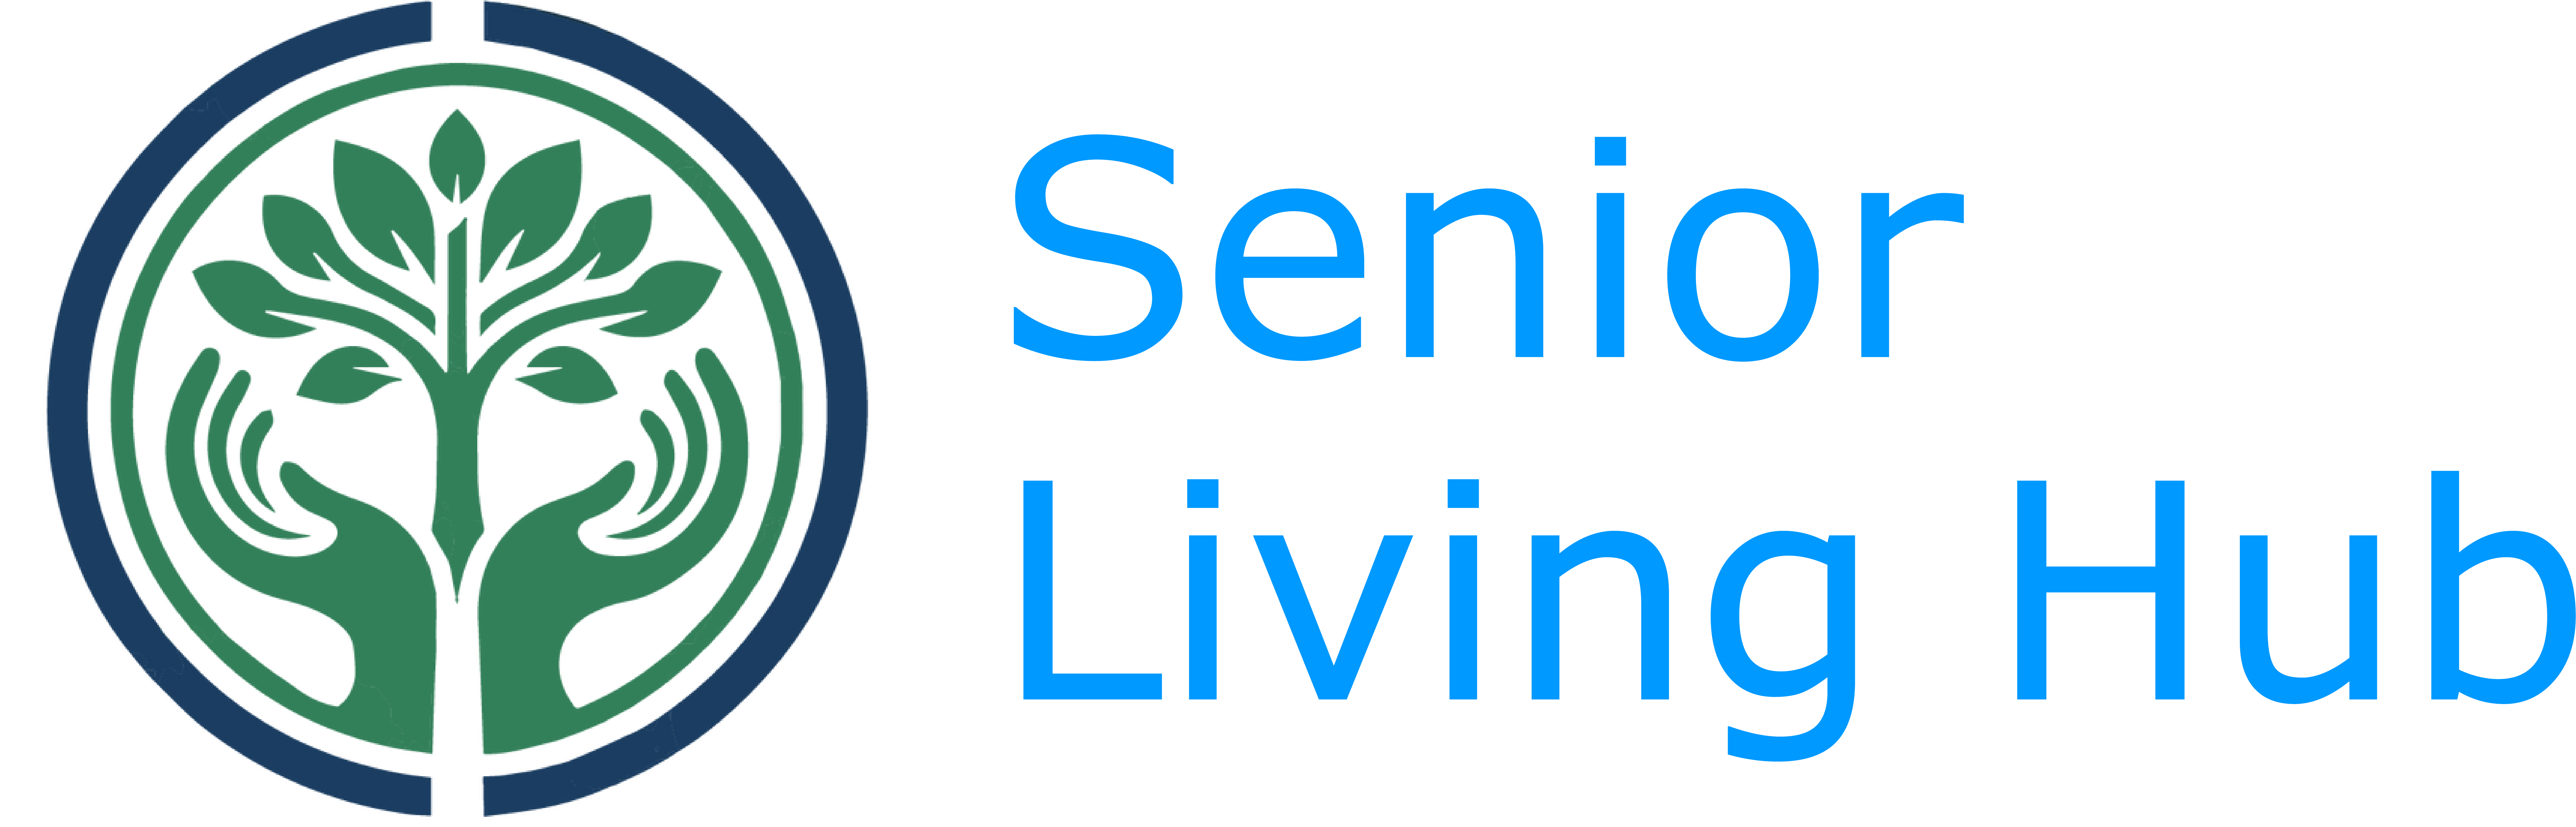 Senior Living Hub